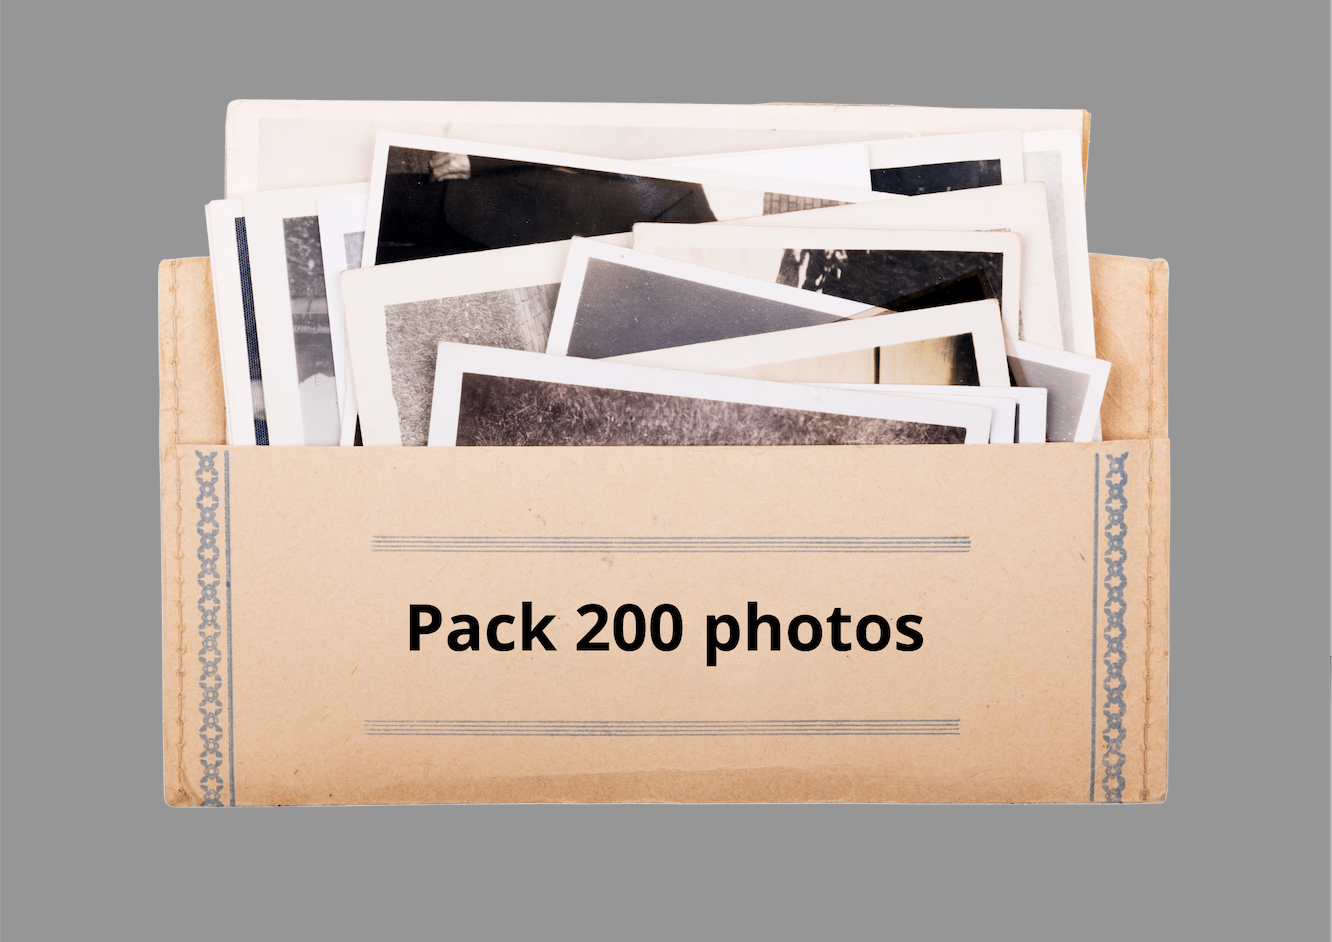 Pack 200 photos